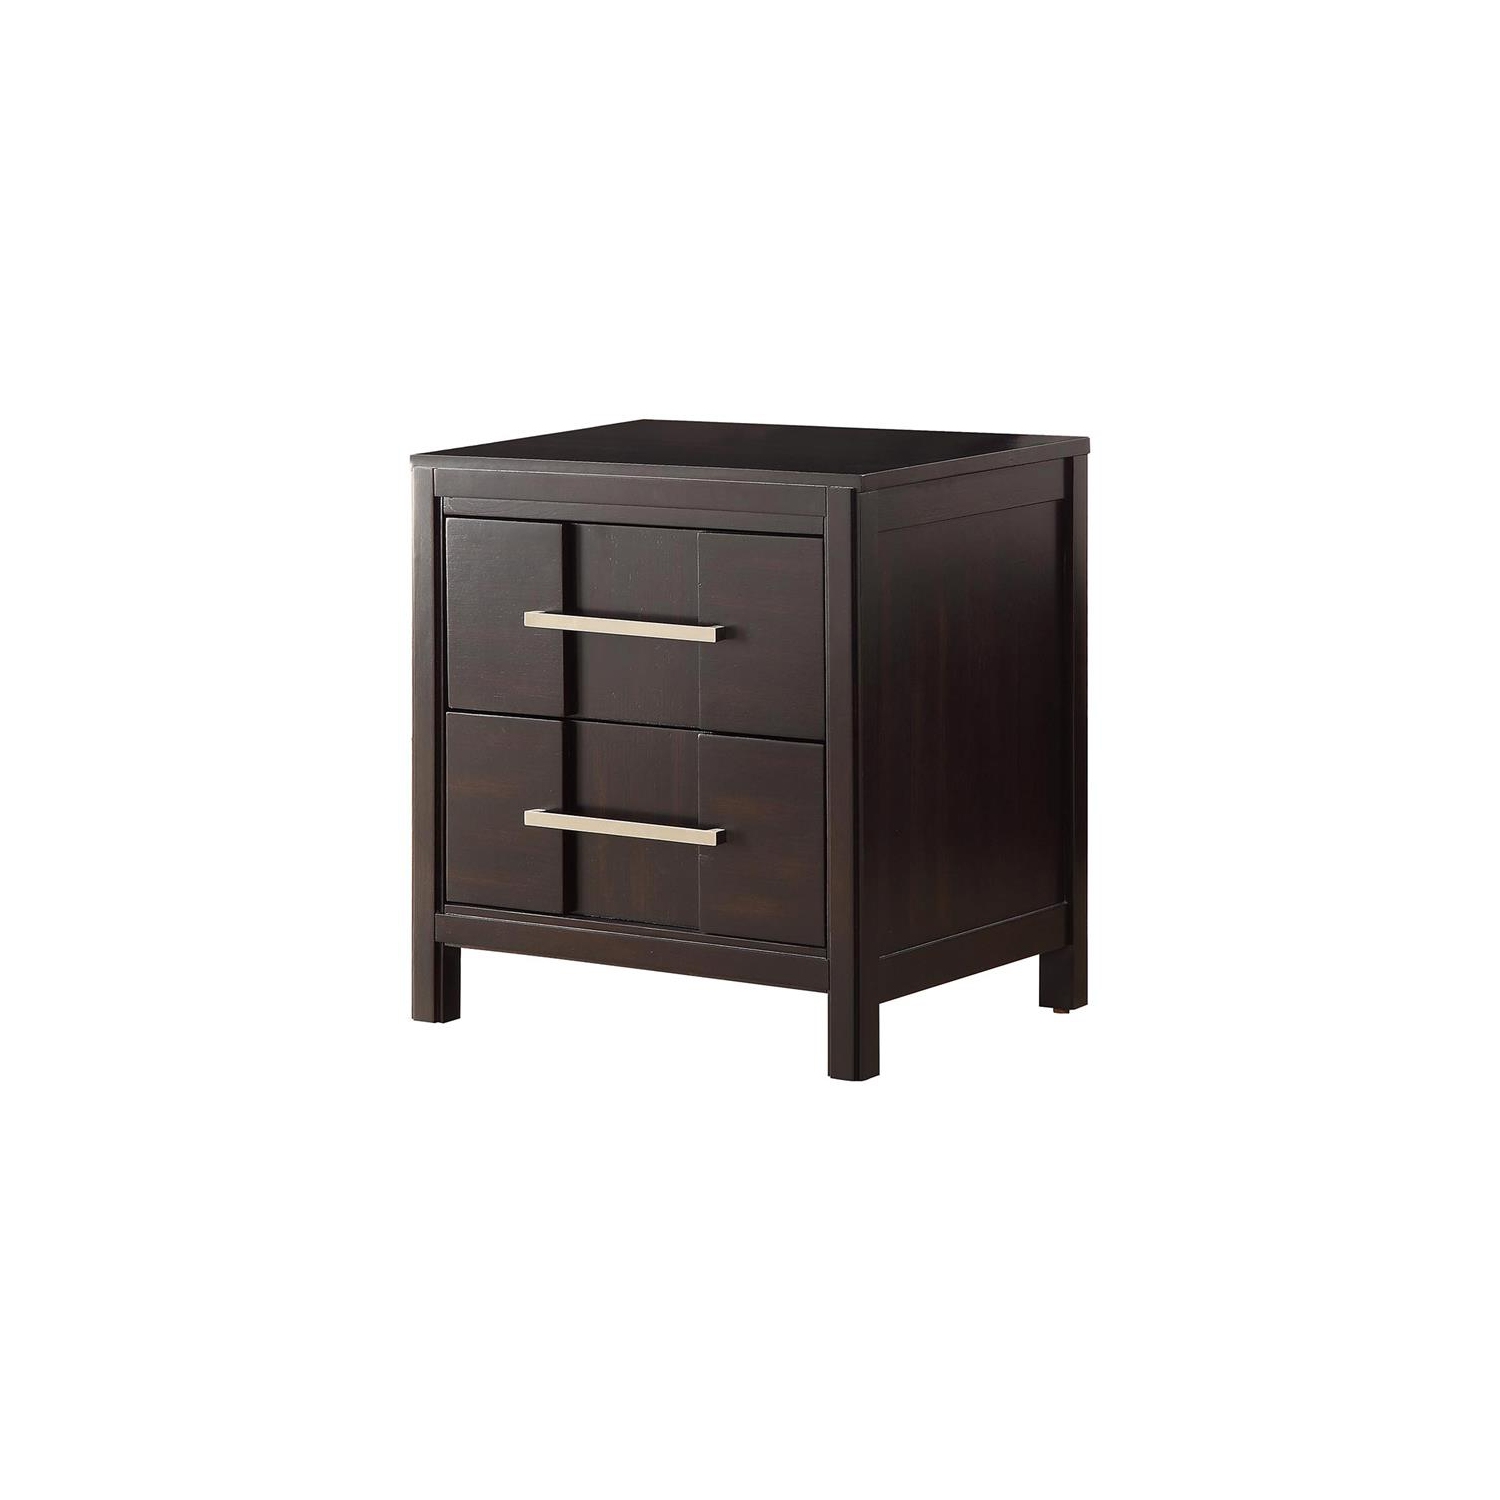 Furniture of America Vela Solid Wood 2-Drawer Nightstand in Espresso